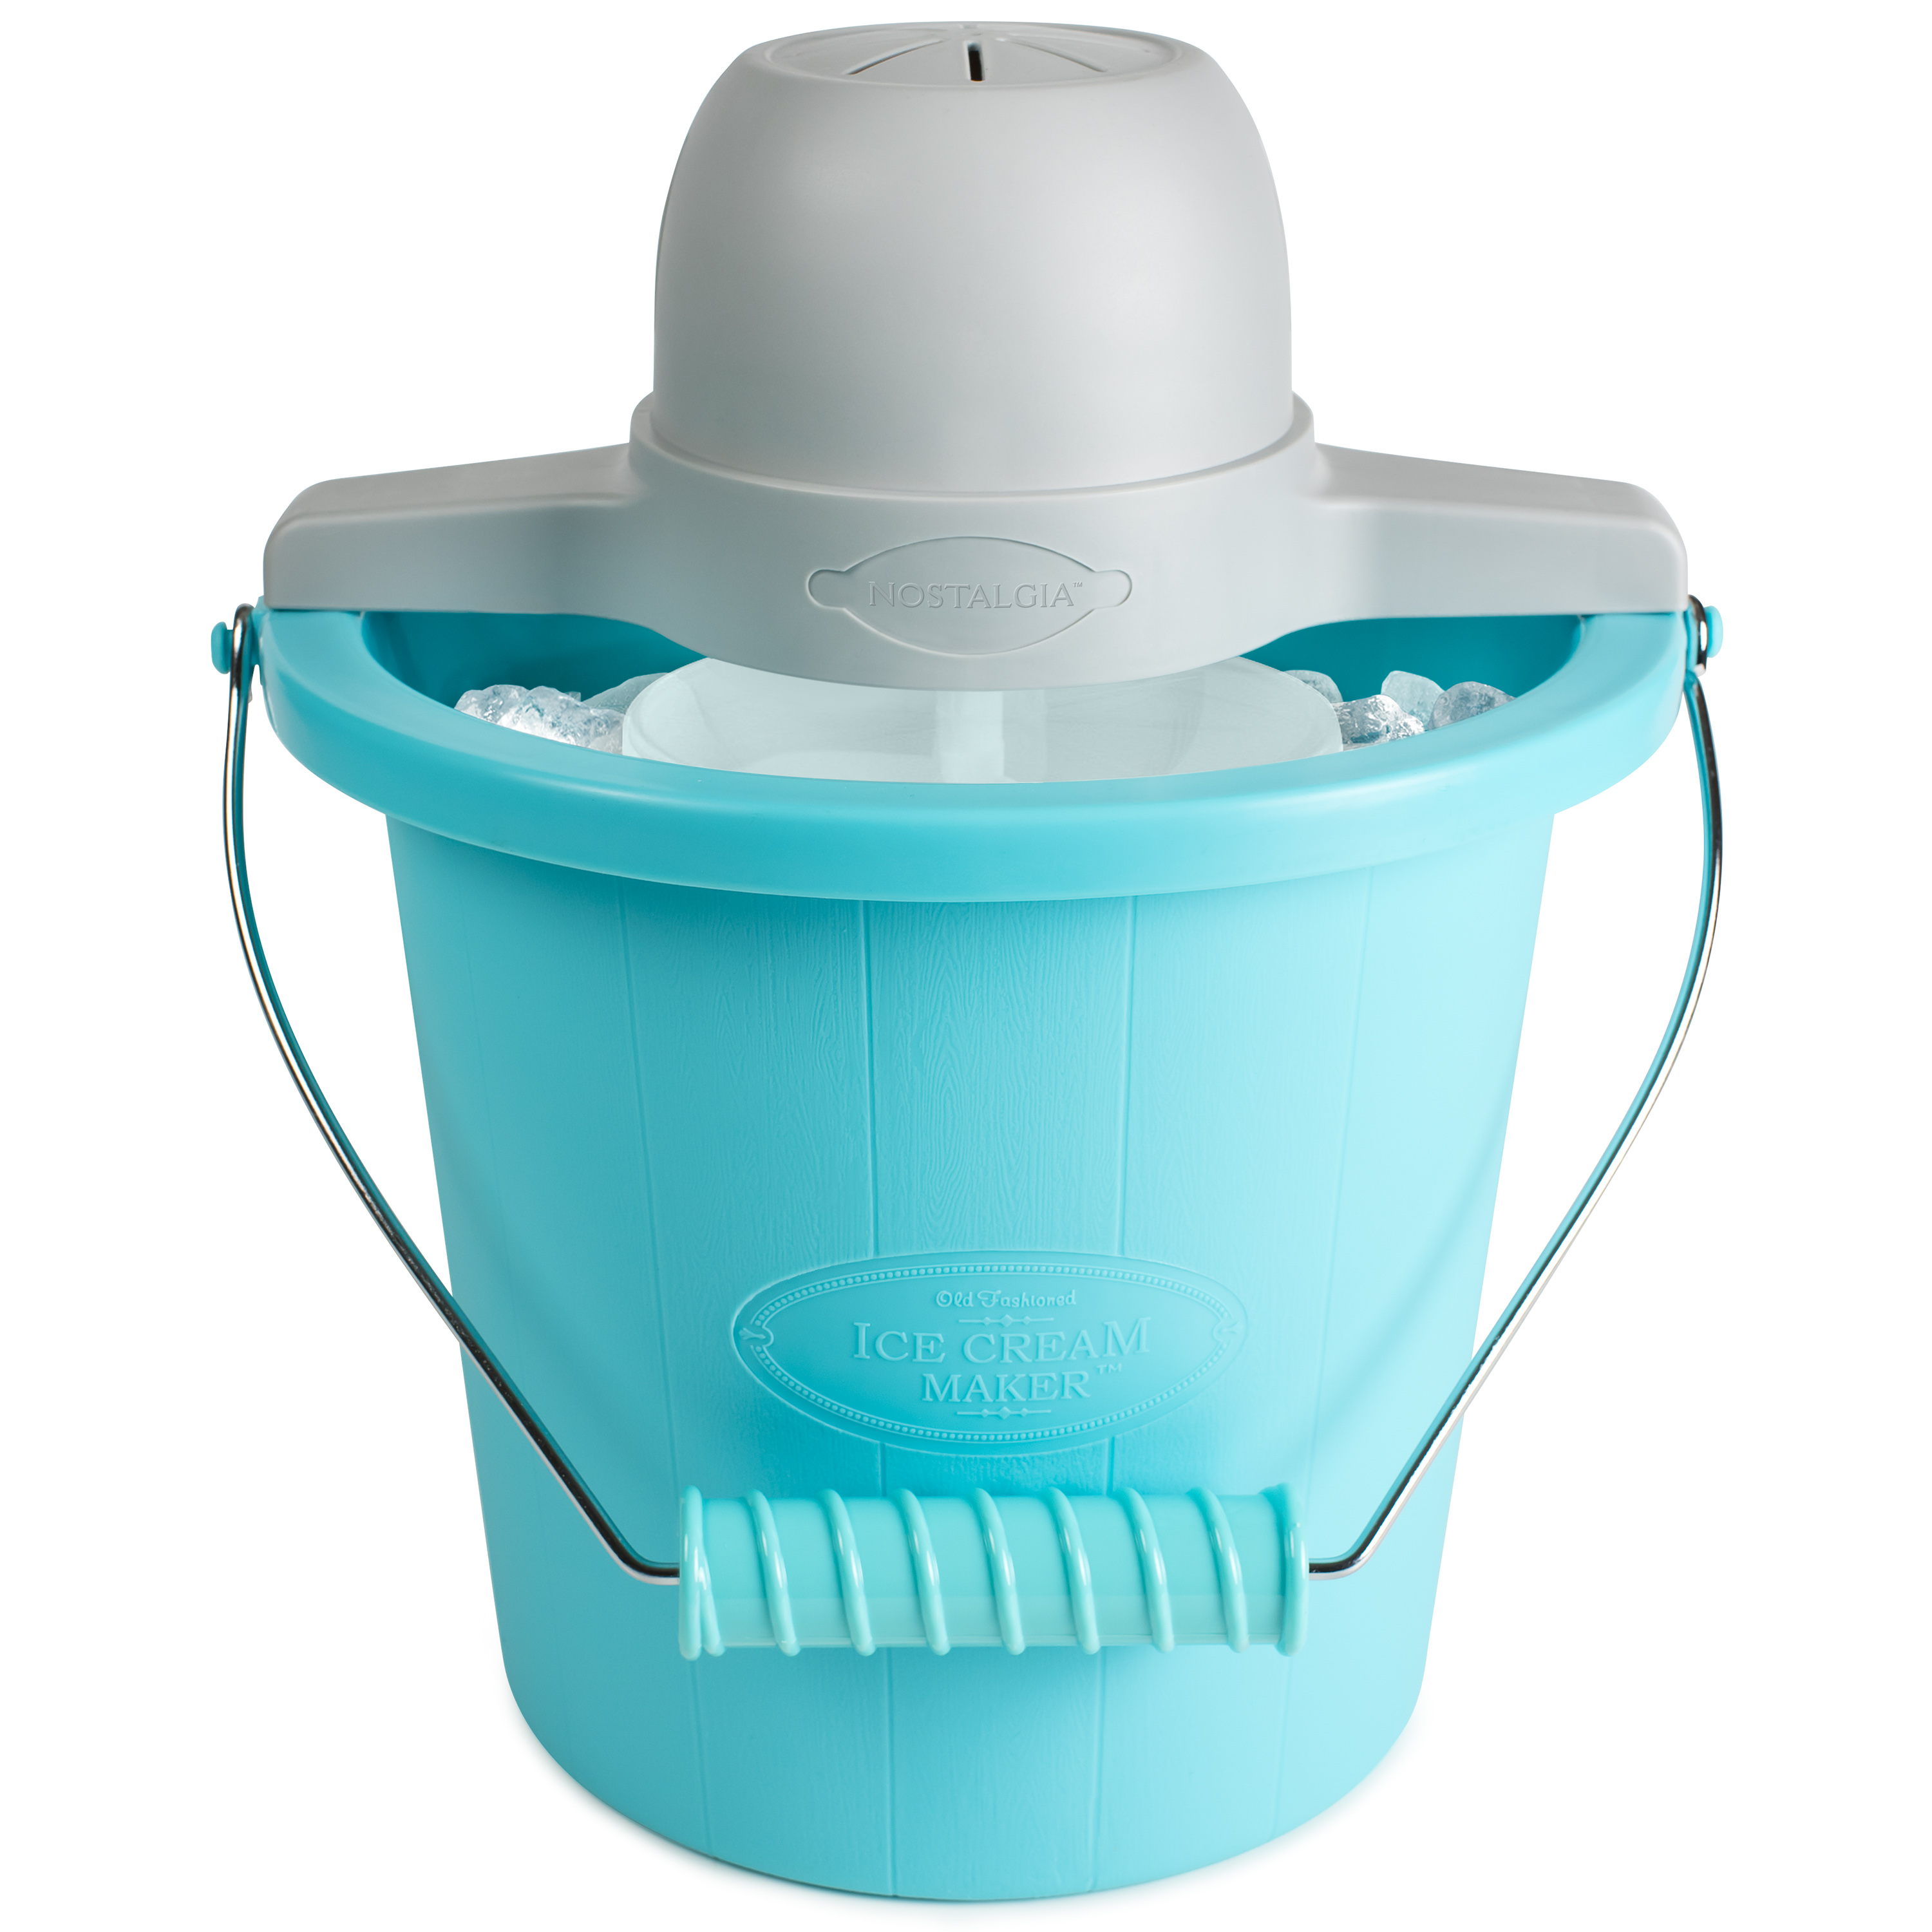 Nostalgia 4-Quart Bucket Electric Ice Cream Maker, Blue - image 4 of 4